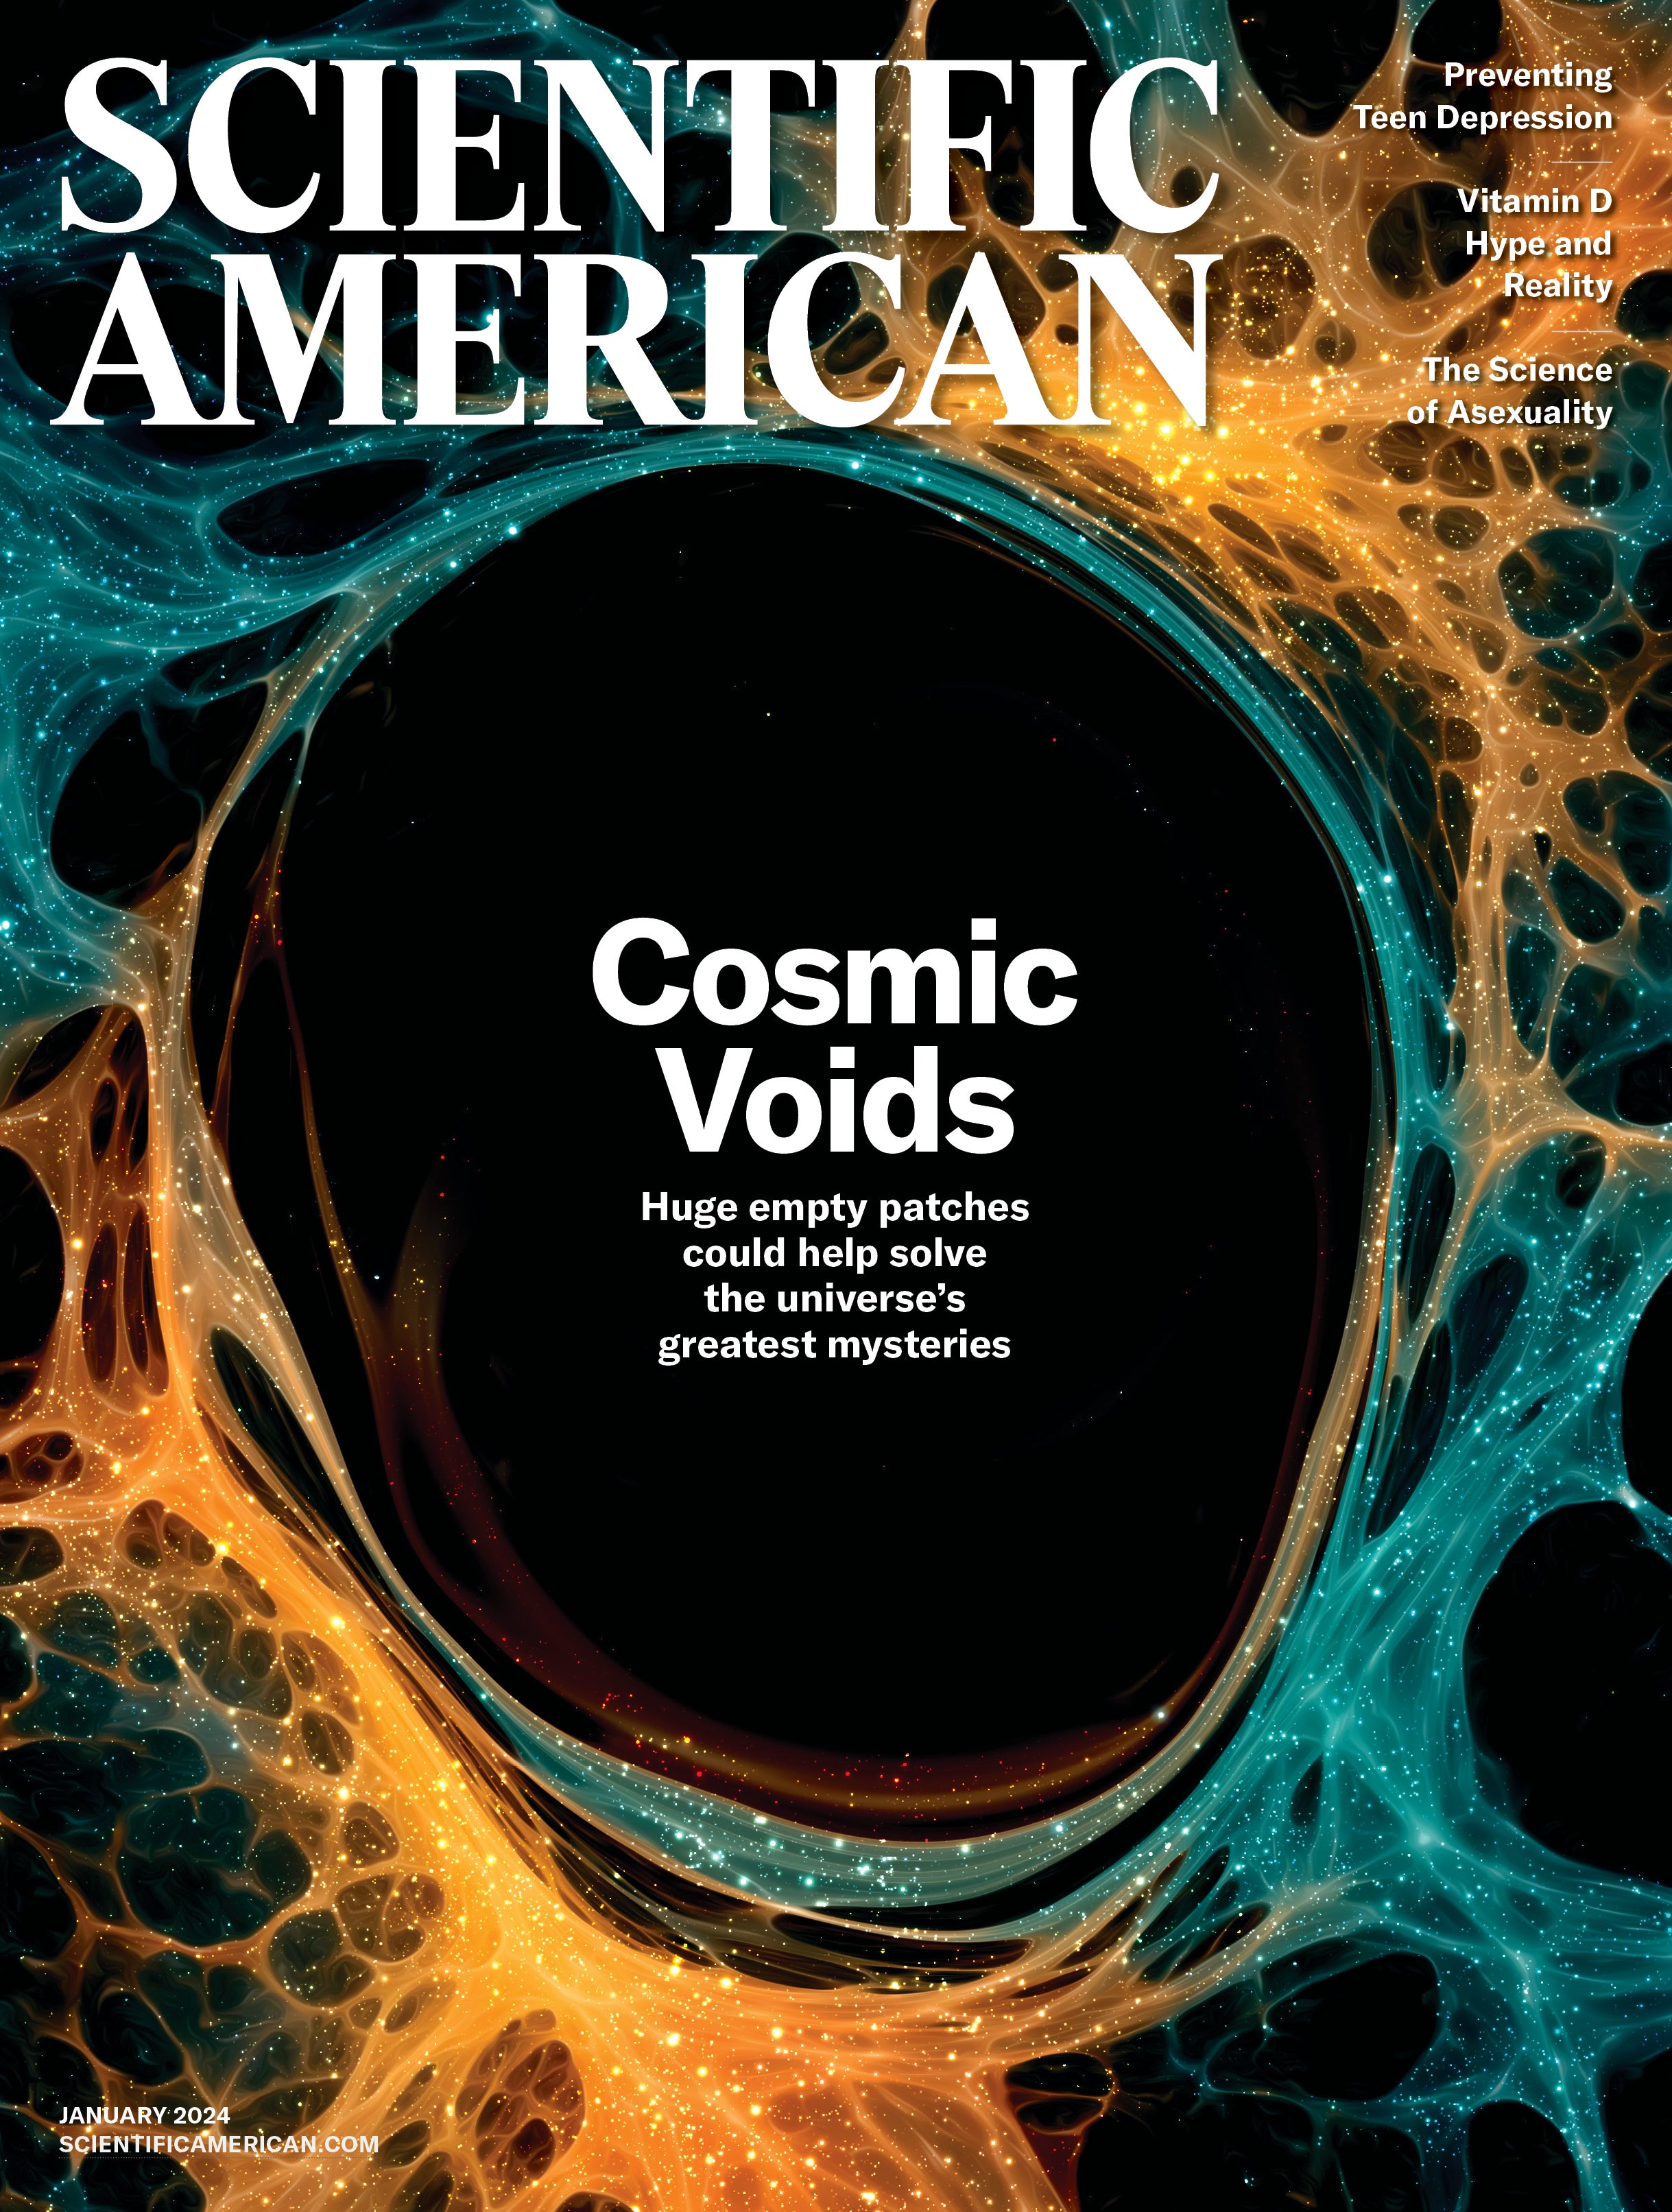 Scientific American Magazine Vol 330 Issue 1